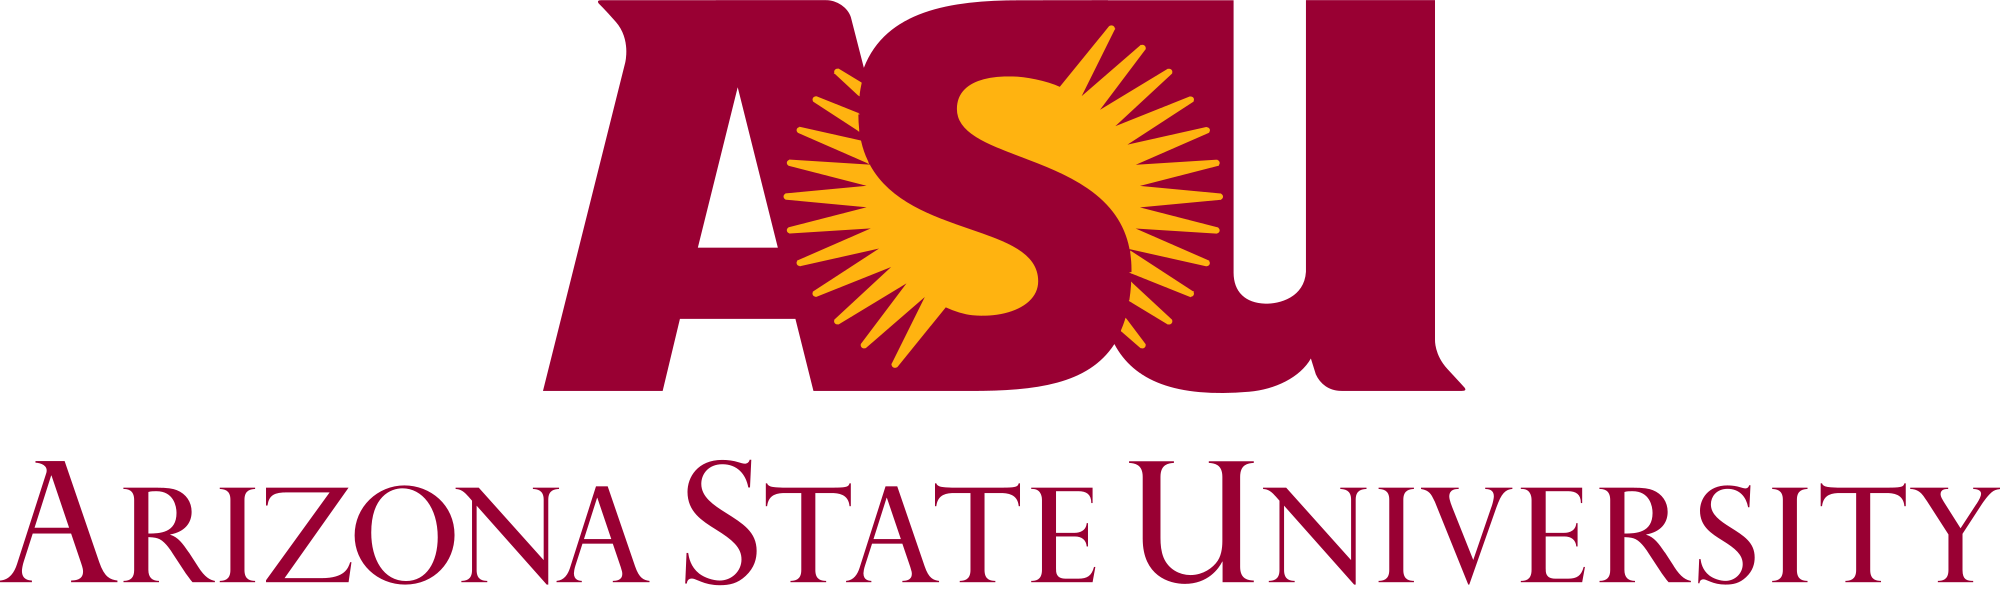 Asu Old Logo - Arizona State University old signature.svg